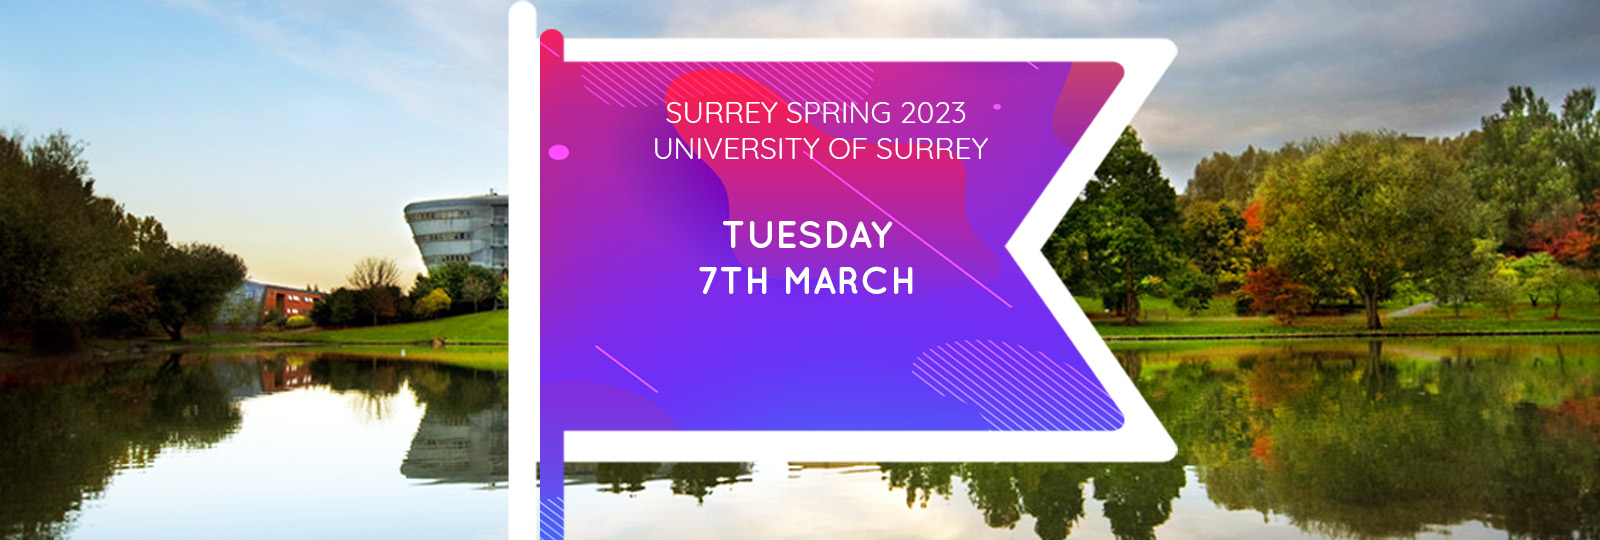 University of Surrey 2023 Fair